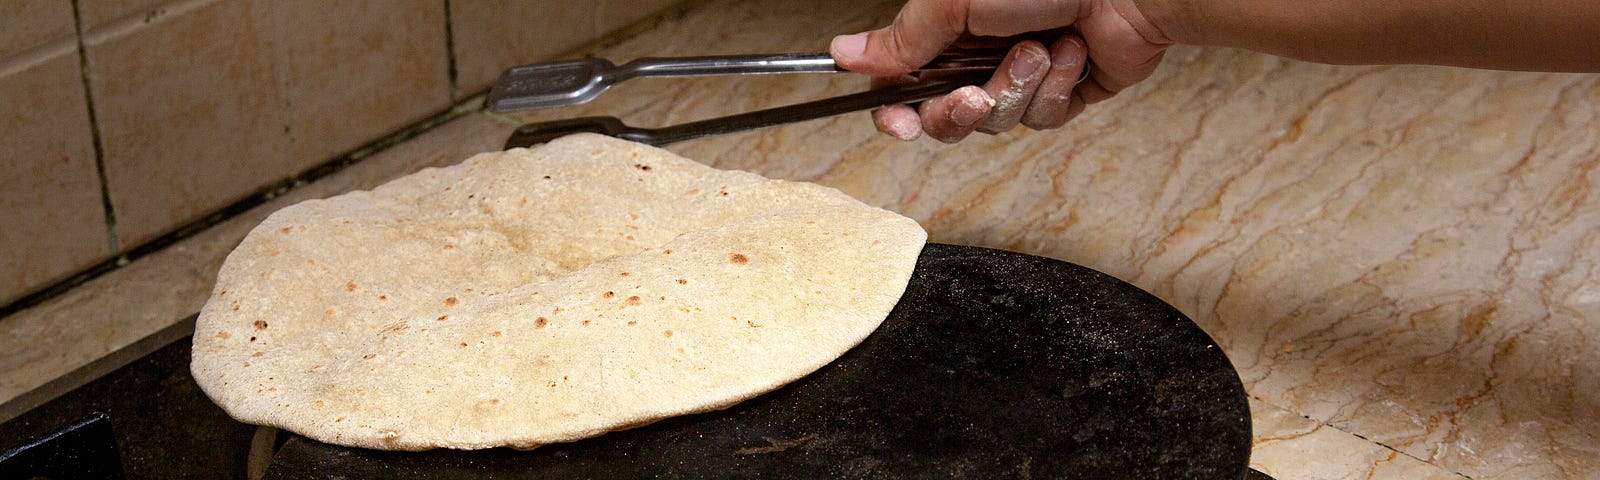 someone flips a tortilla over a flat pan